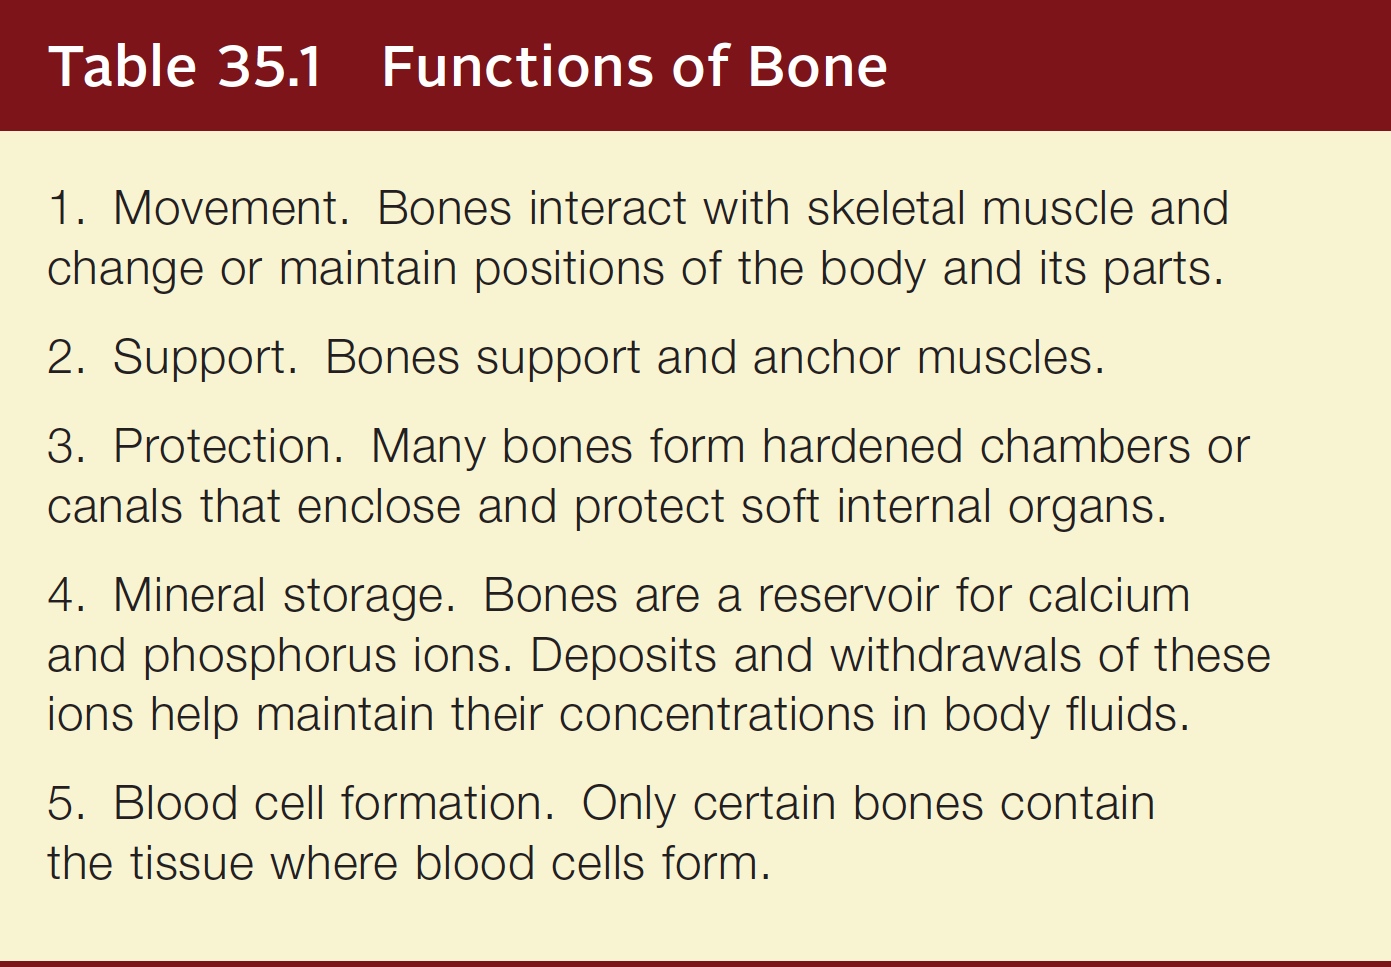 Function of Bone